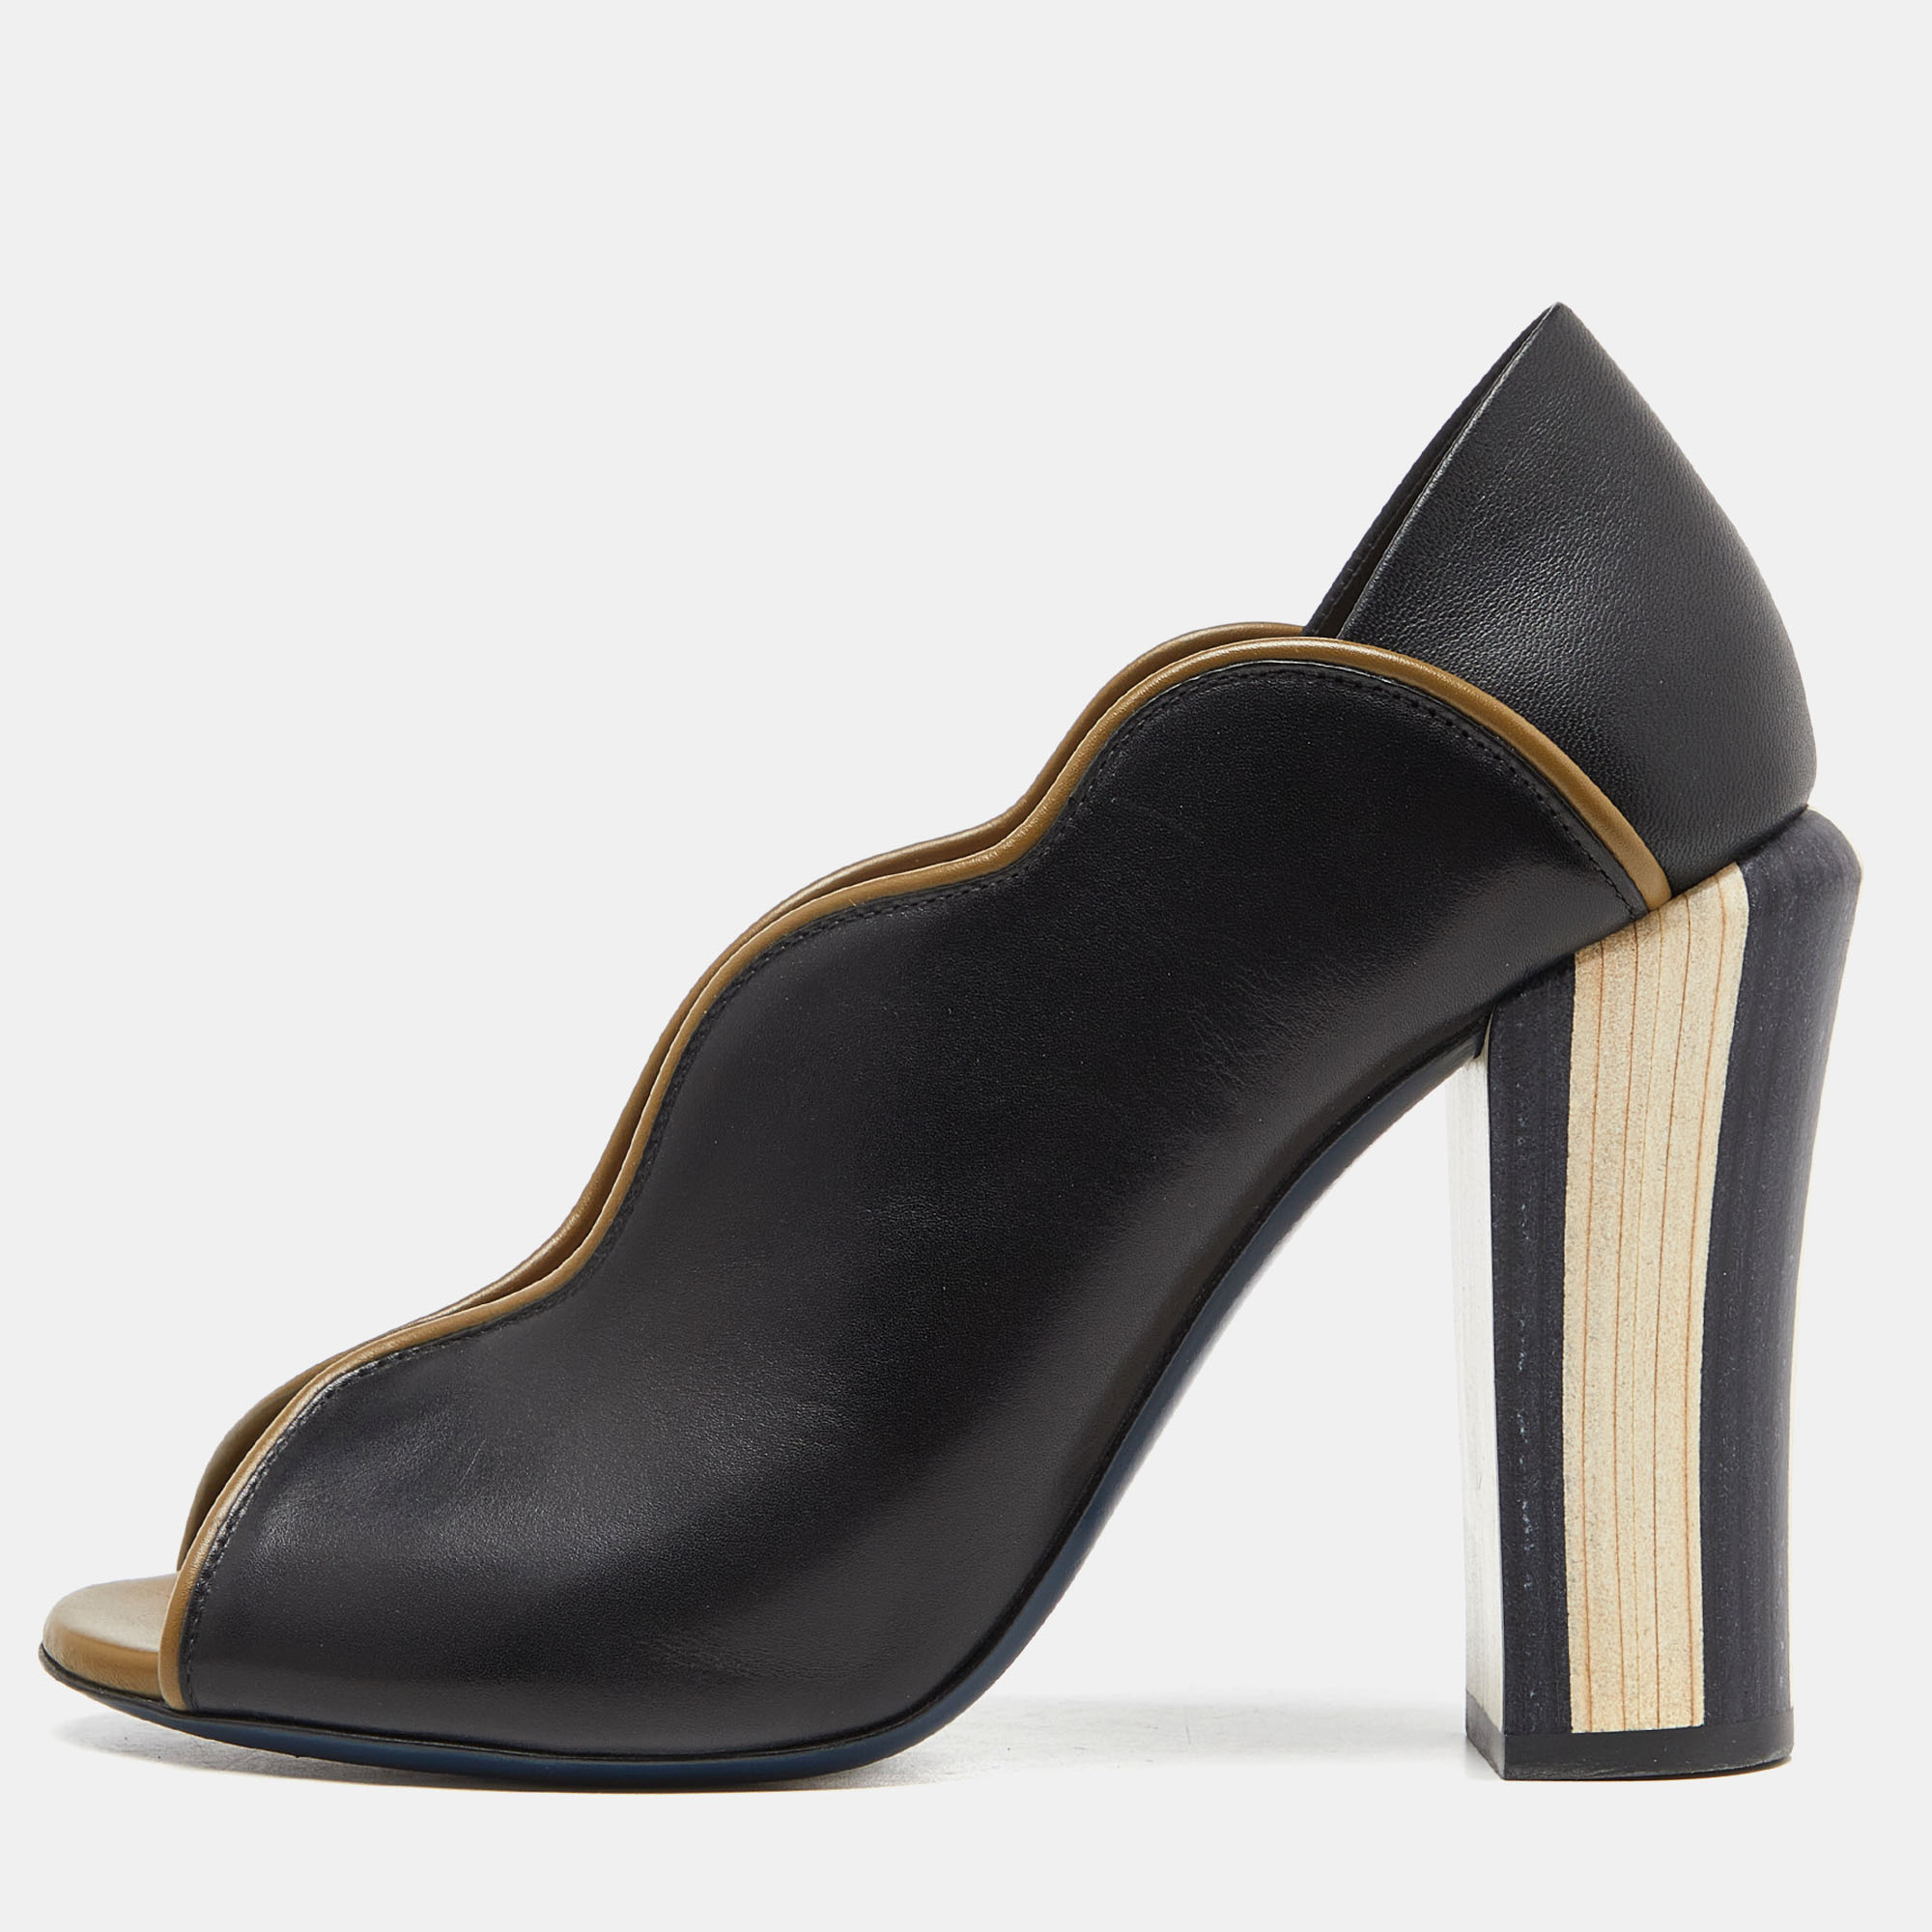 Fendi black leather scallop lined peep toe sandals size 36